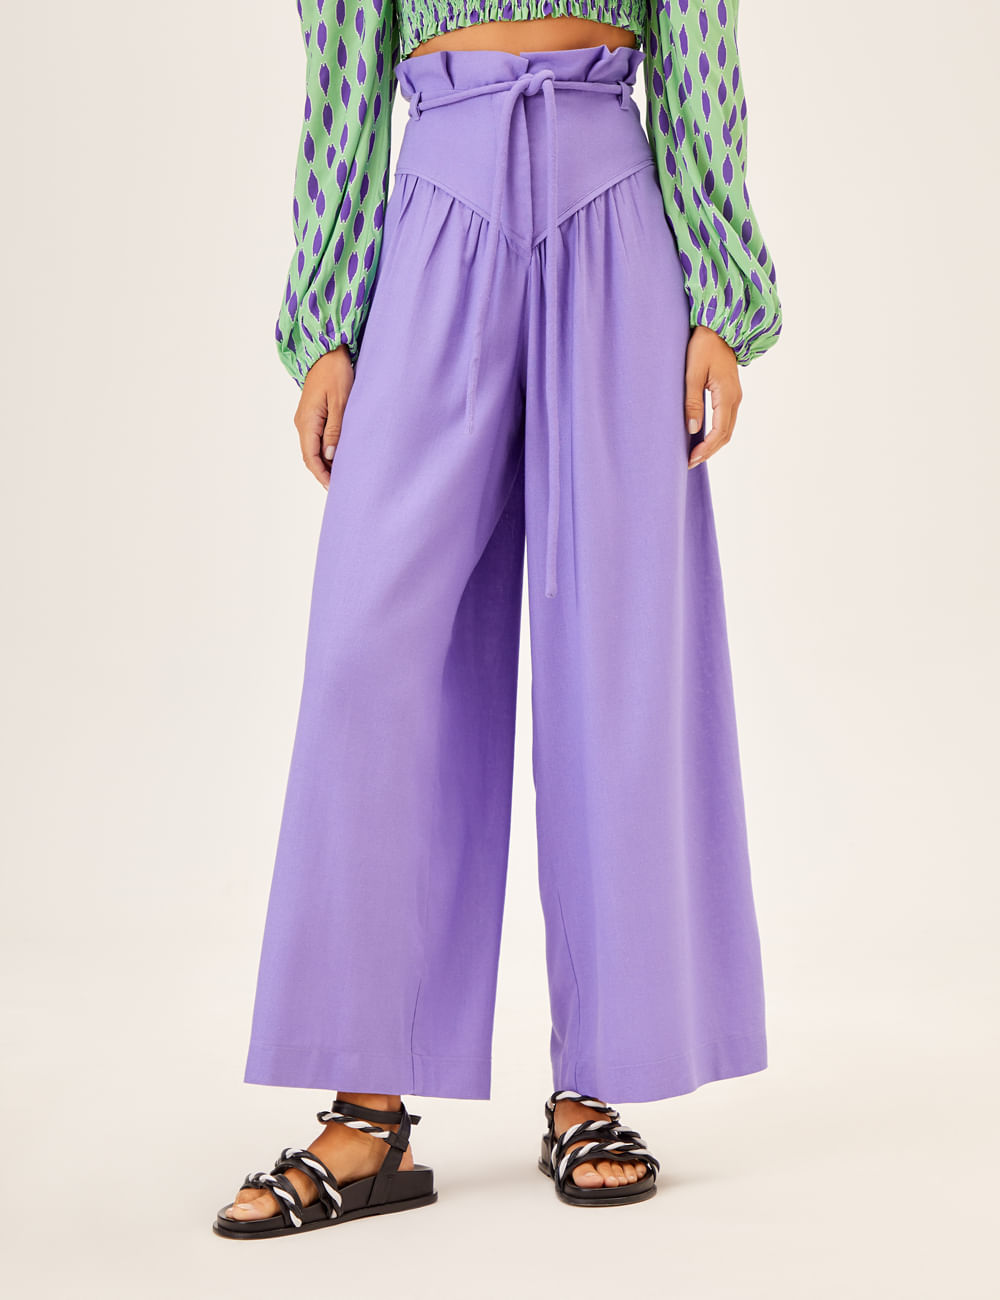 Marizinha - ☁️💎🕯 Pantalón tela duna Última tendencia textil do